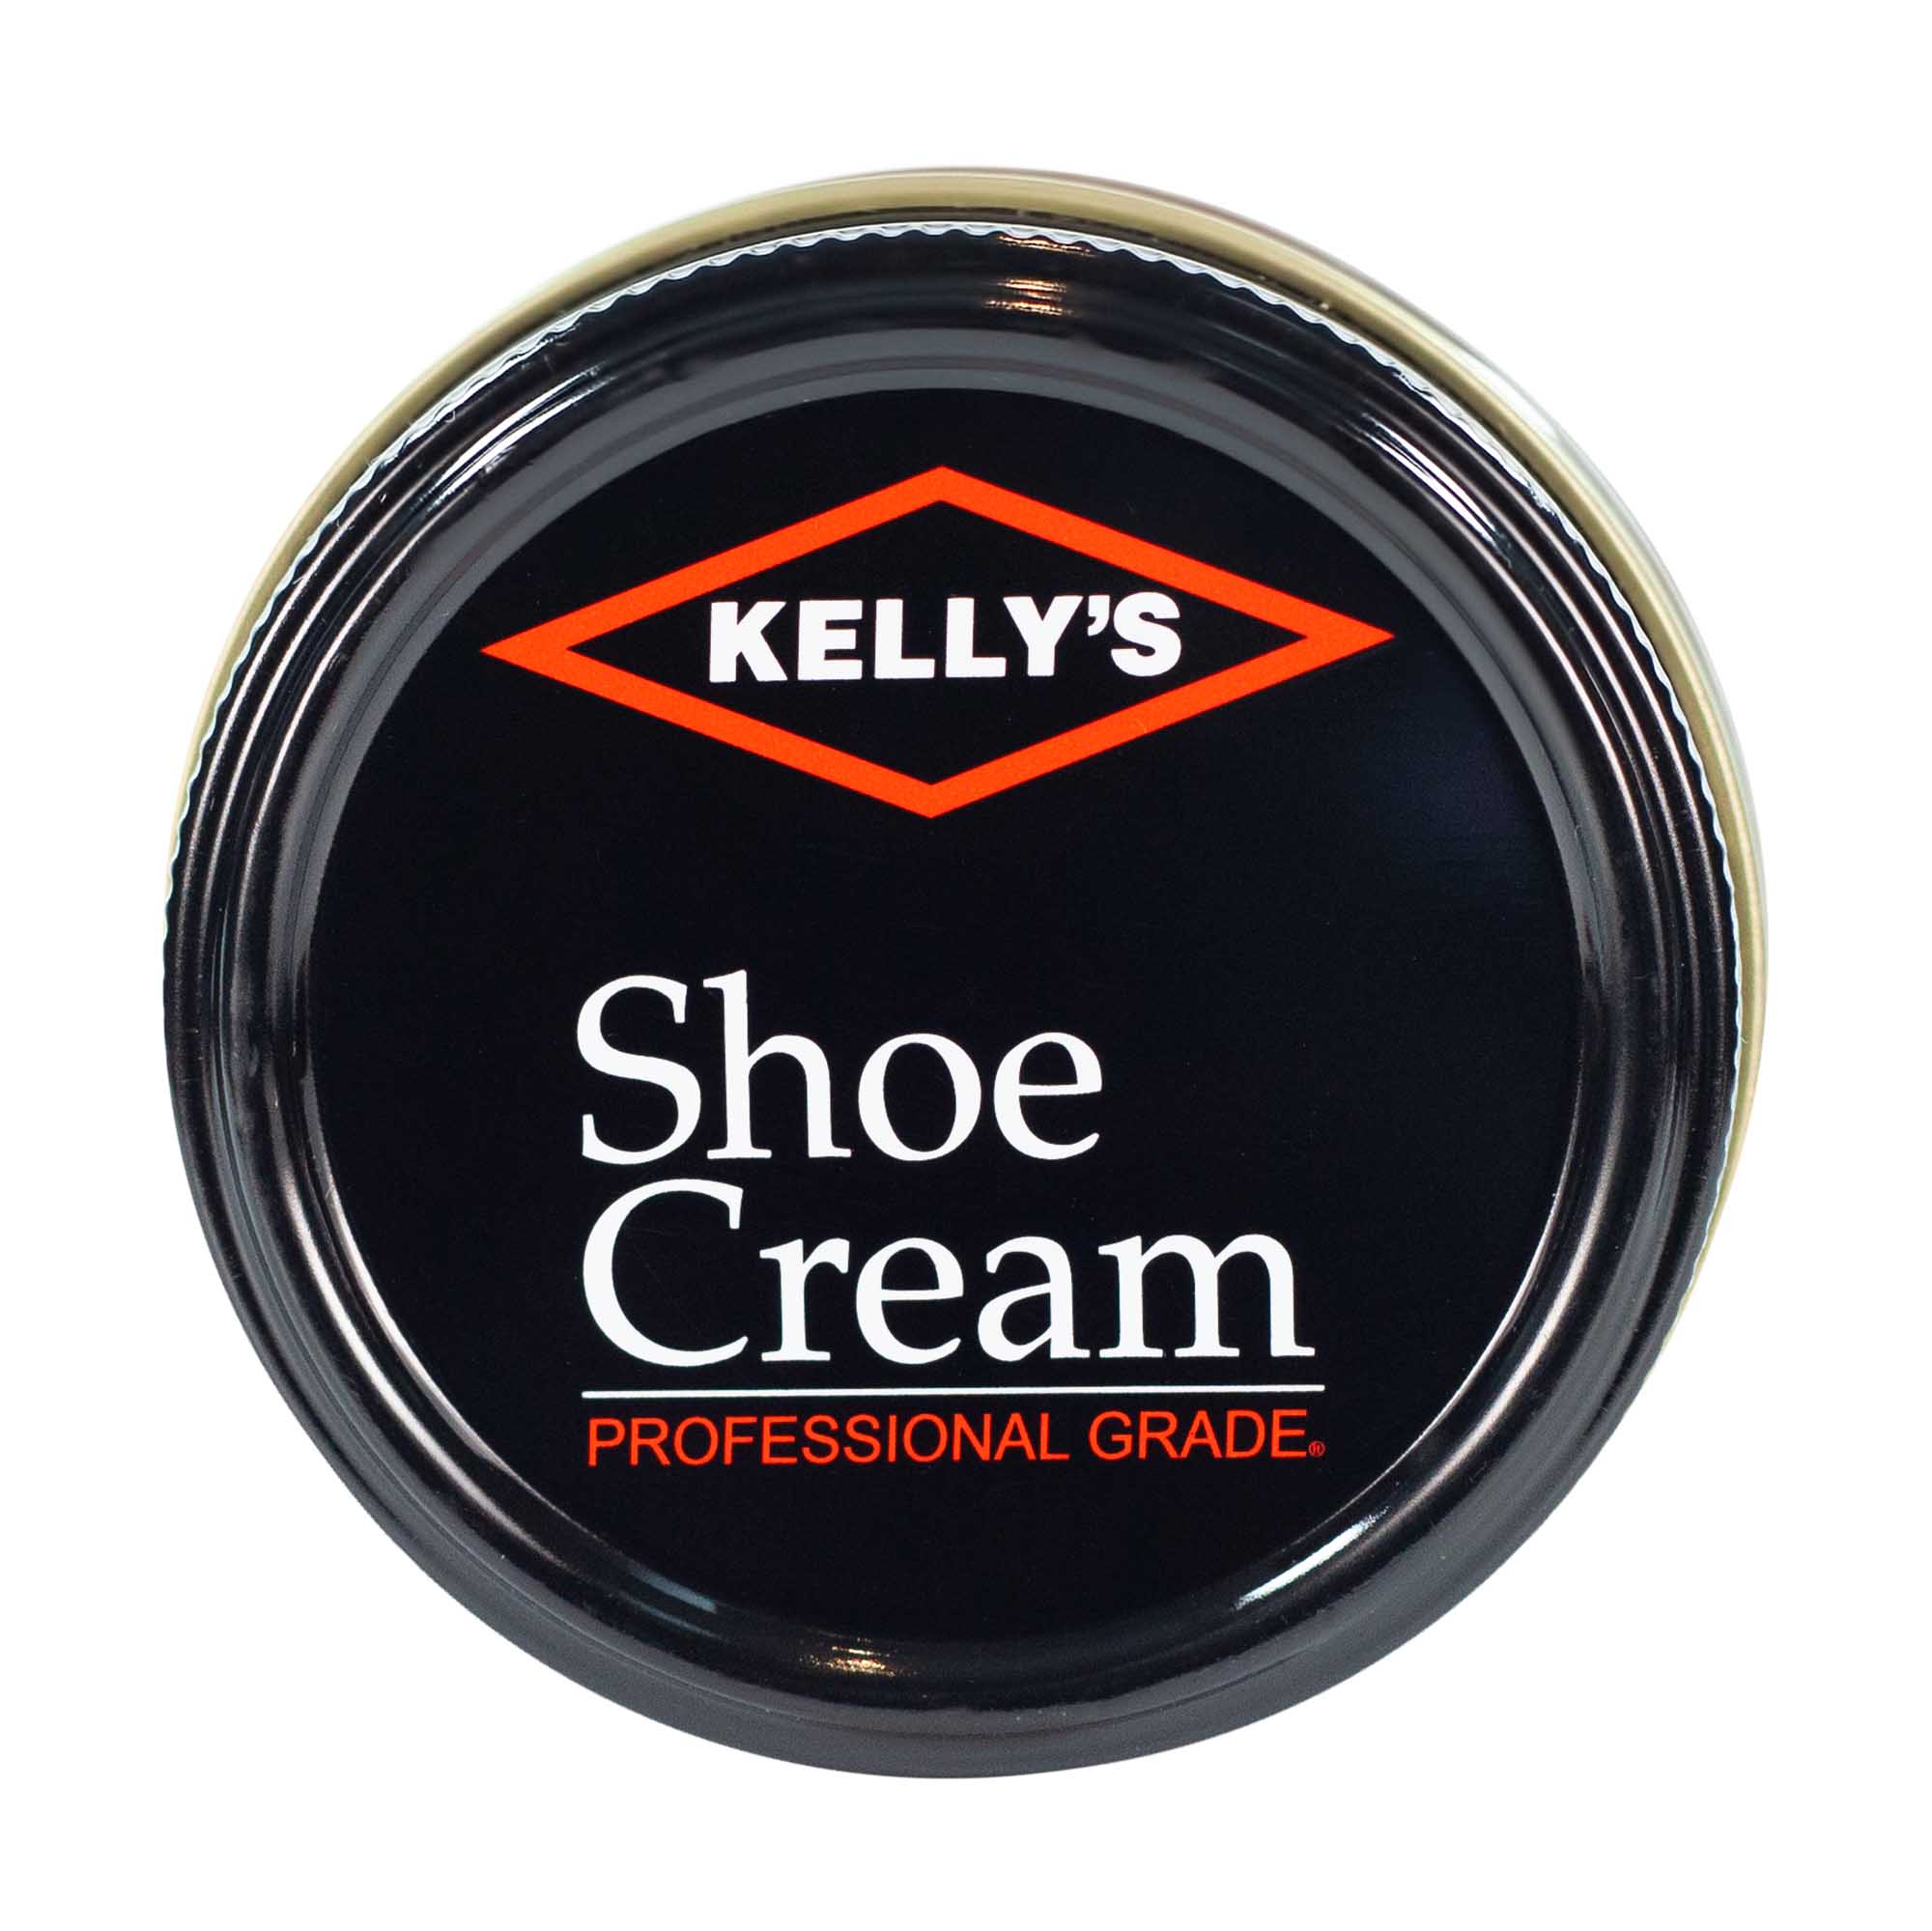 S Shoe Cream Color Chart